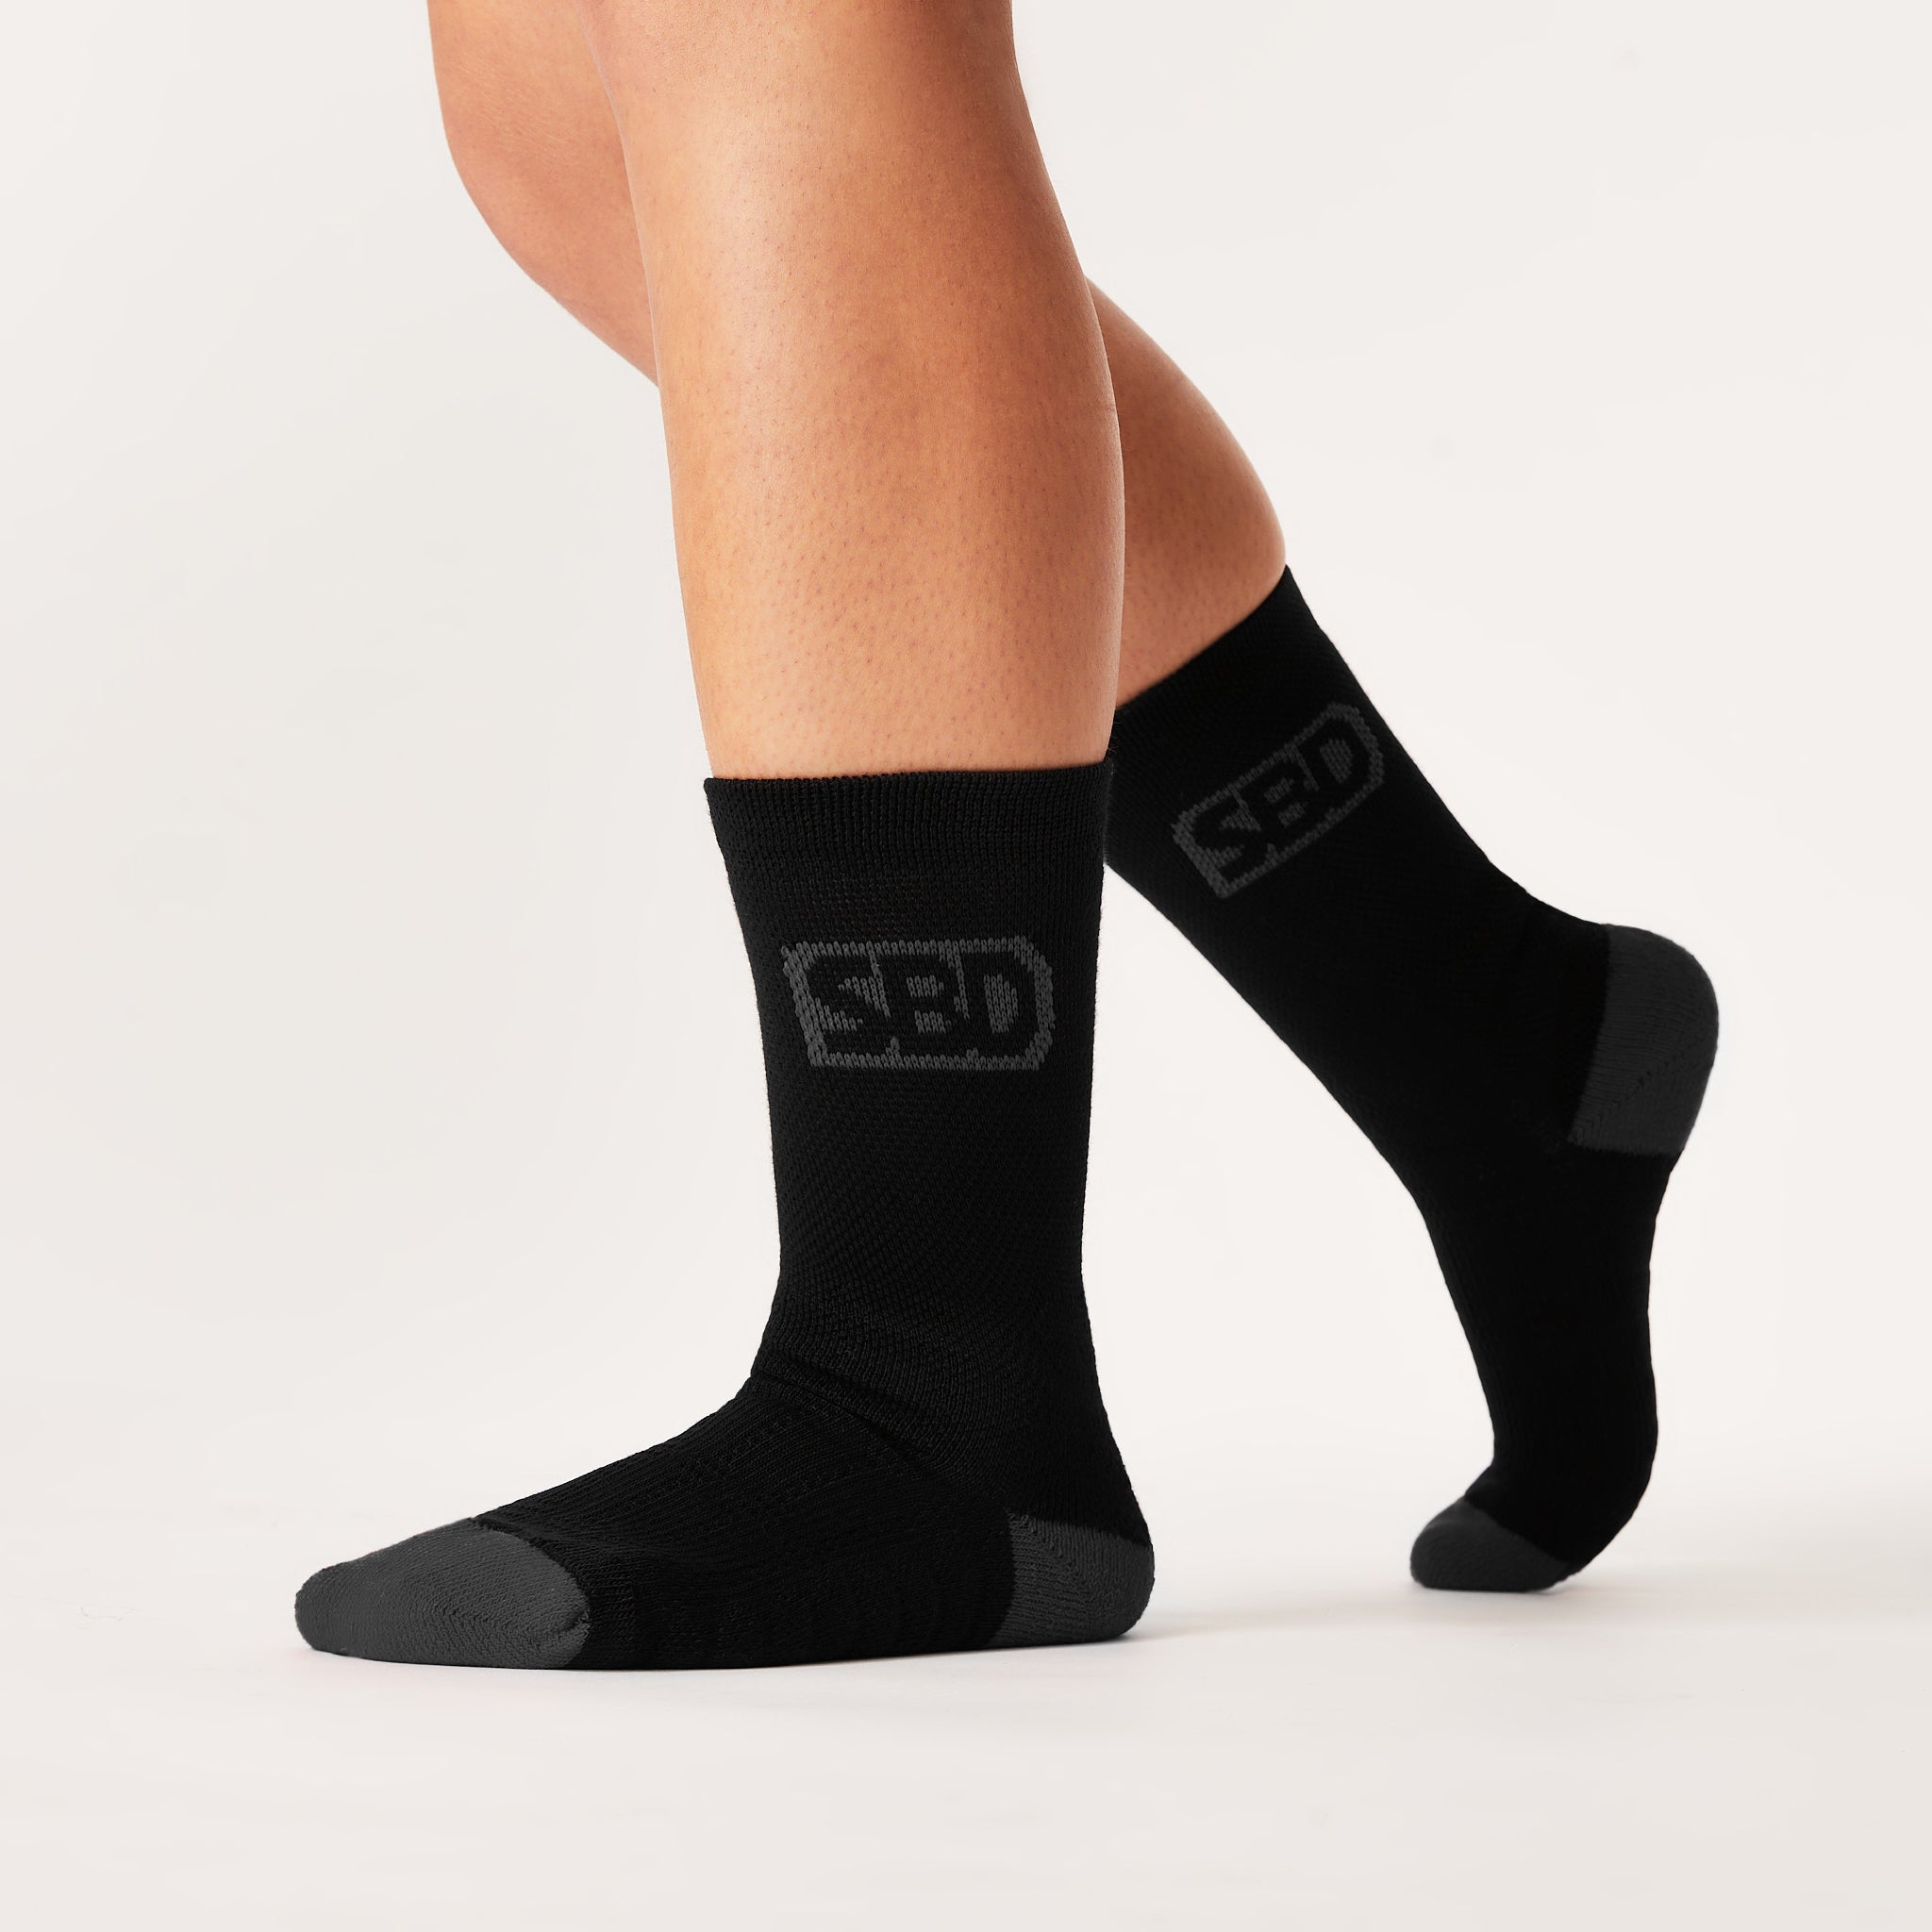 SBD Sport socks PHANTOM Limited Edition